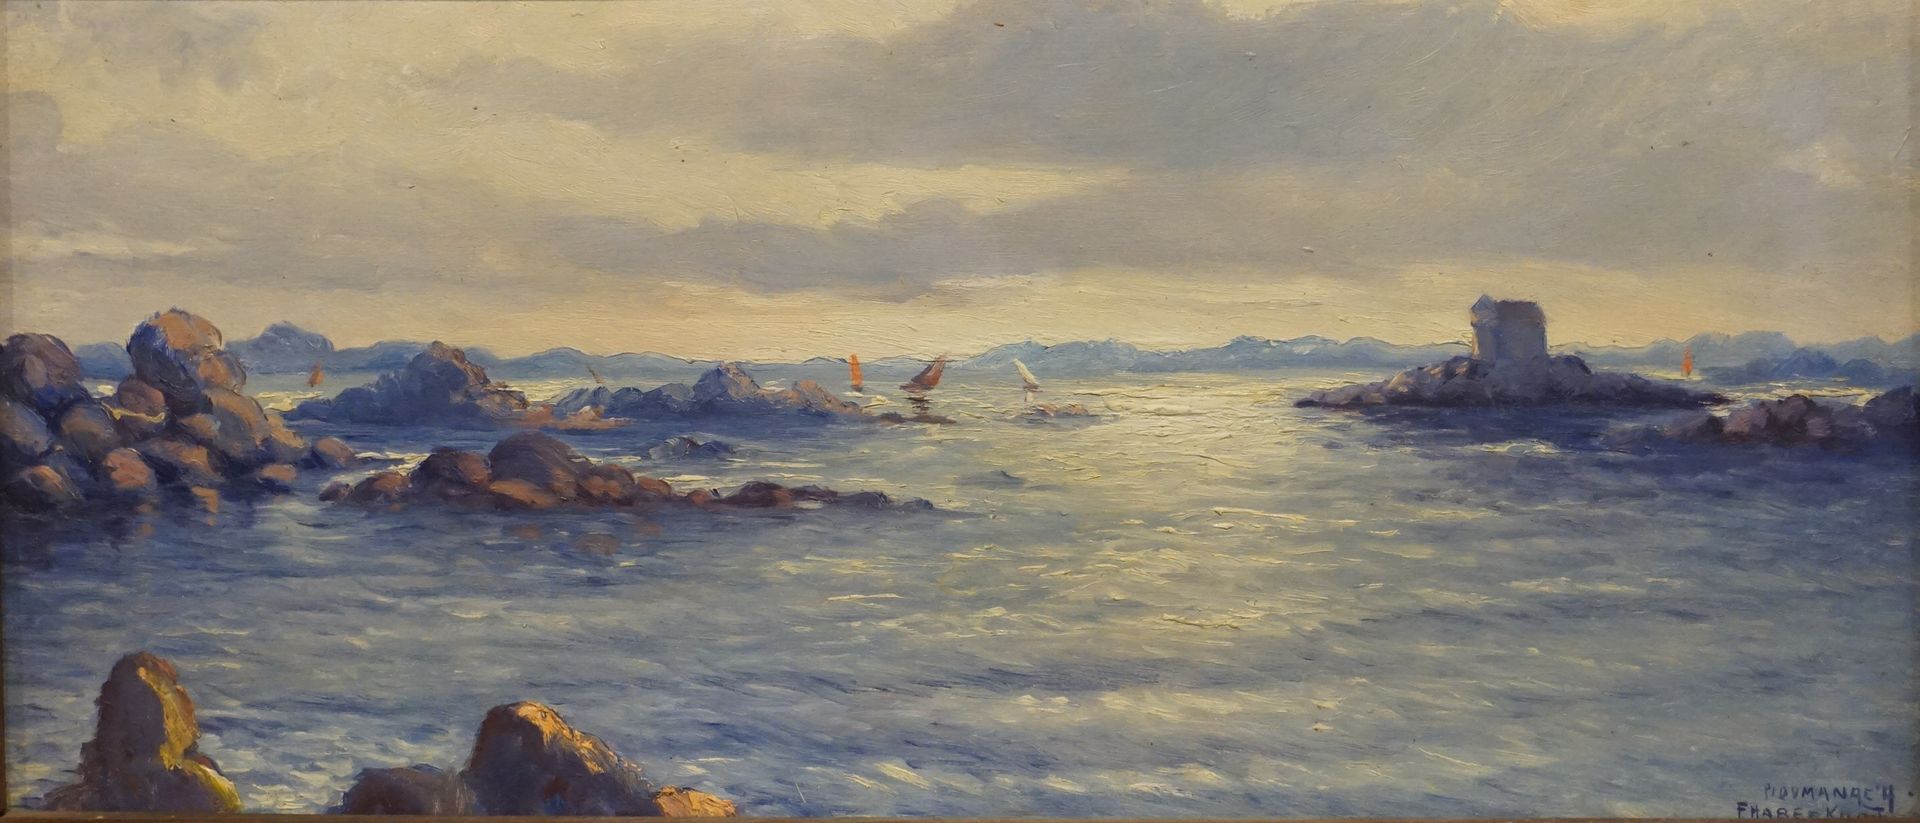 F.HABERKOAN (XX°) "Ploumanac'h", oil on panel, sbd. 29x63 cm